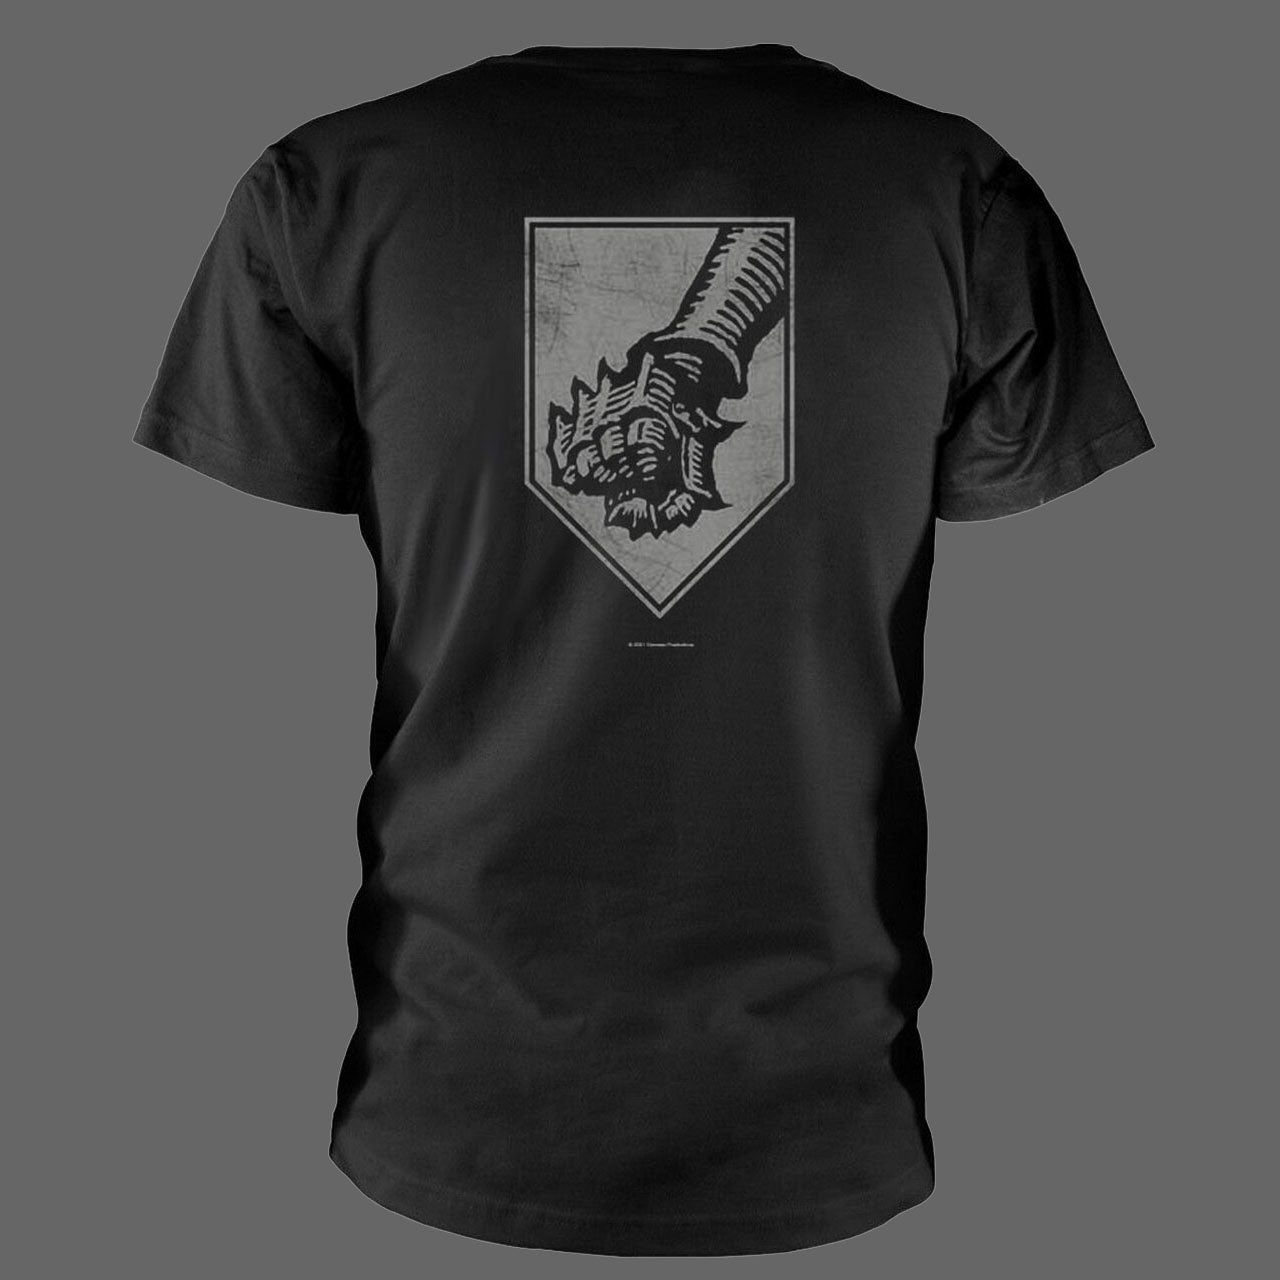 Diocletian - Gesundrian (T-Shirt)